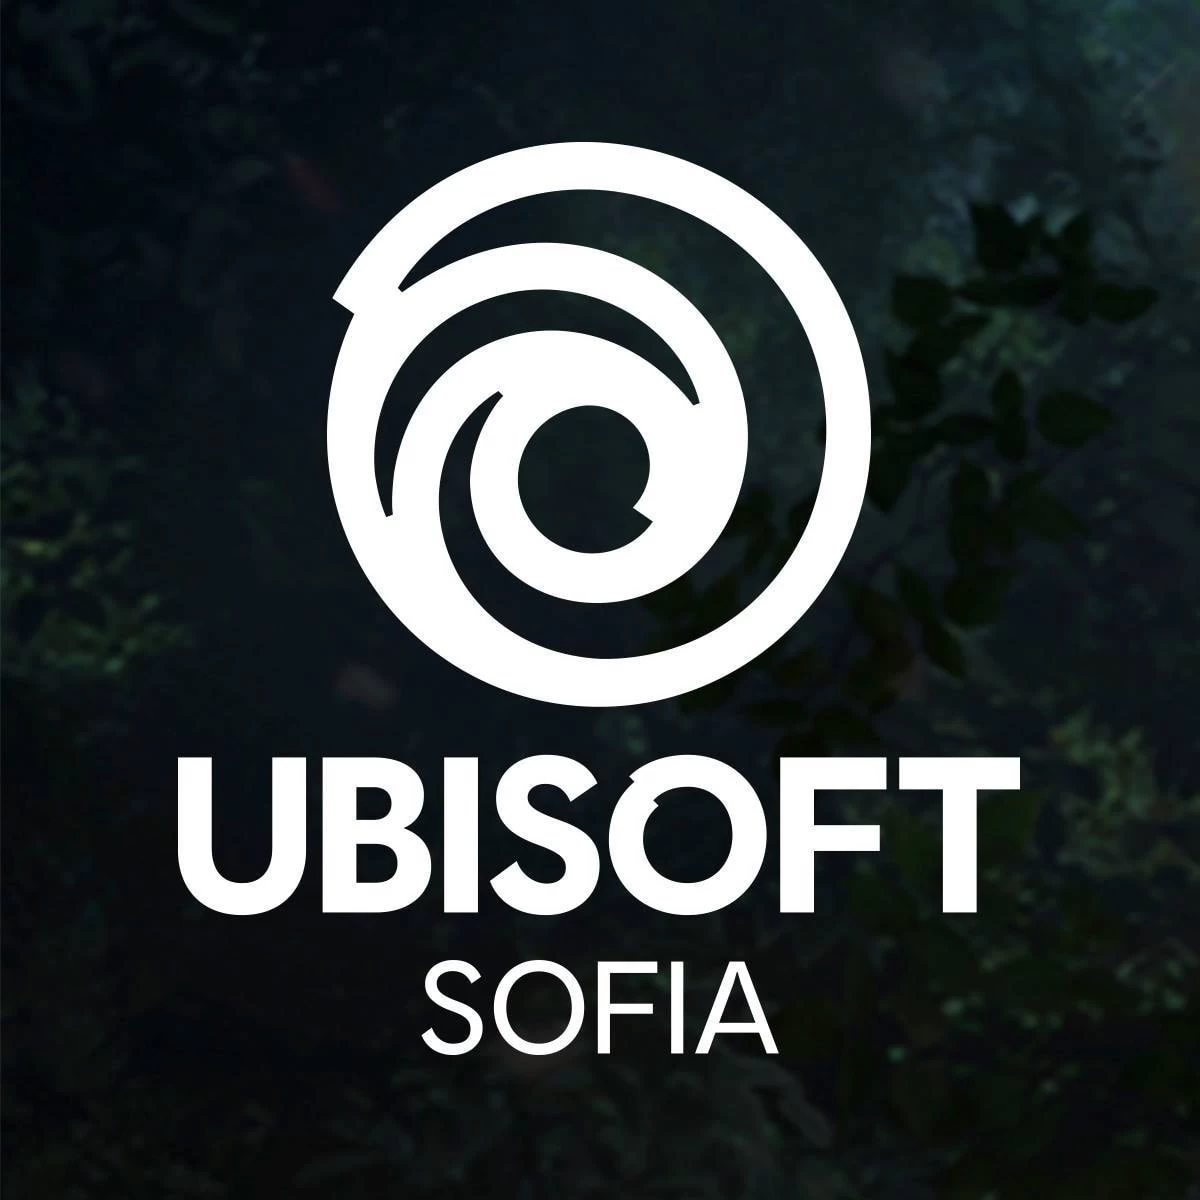 Ubisoft Sofia developer logo